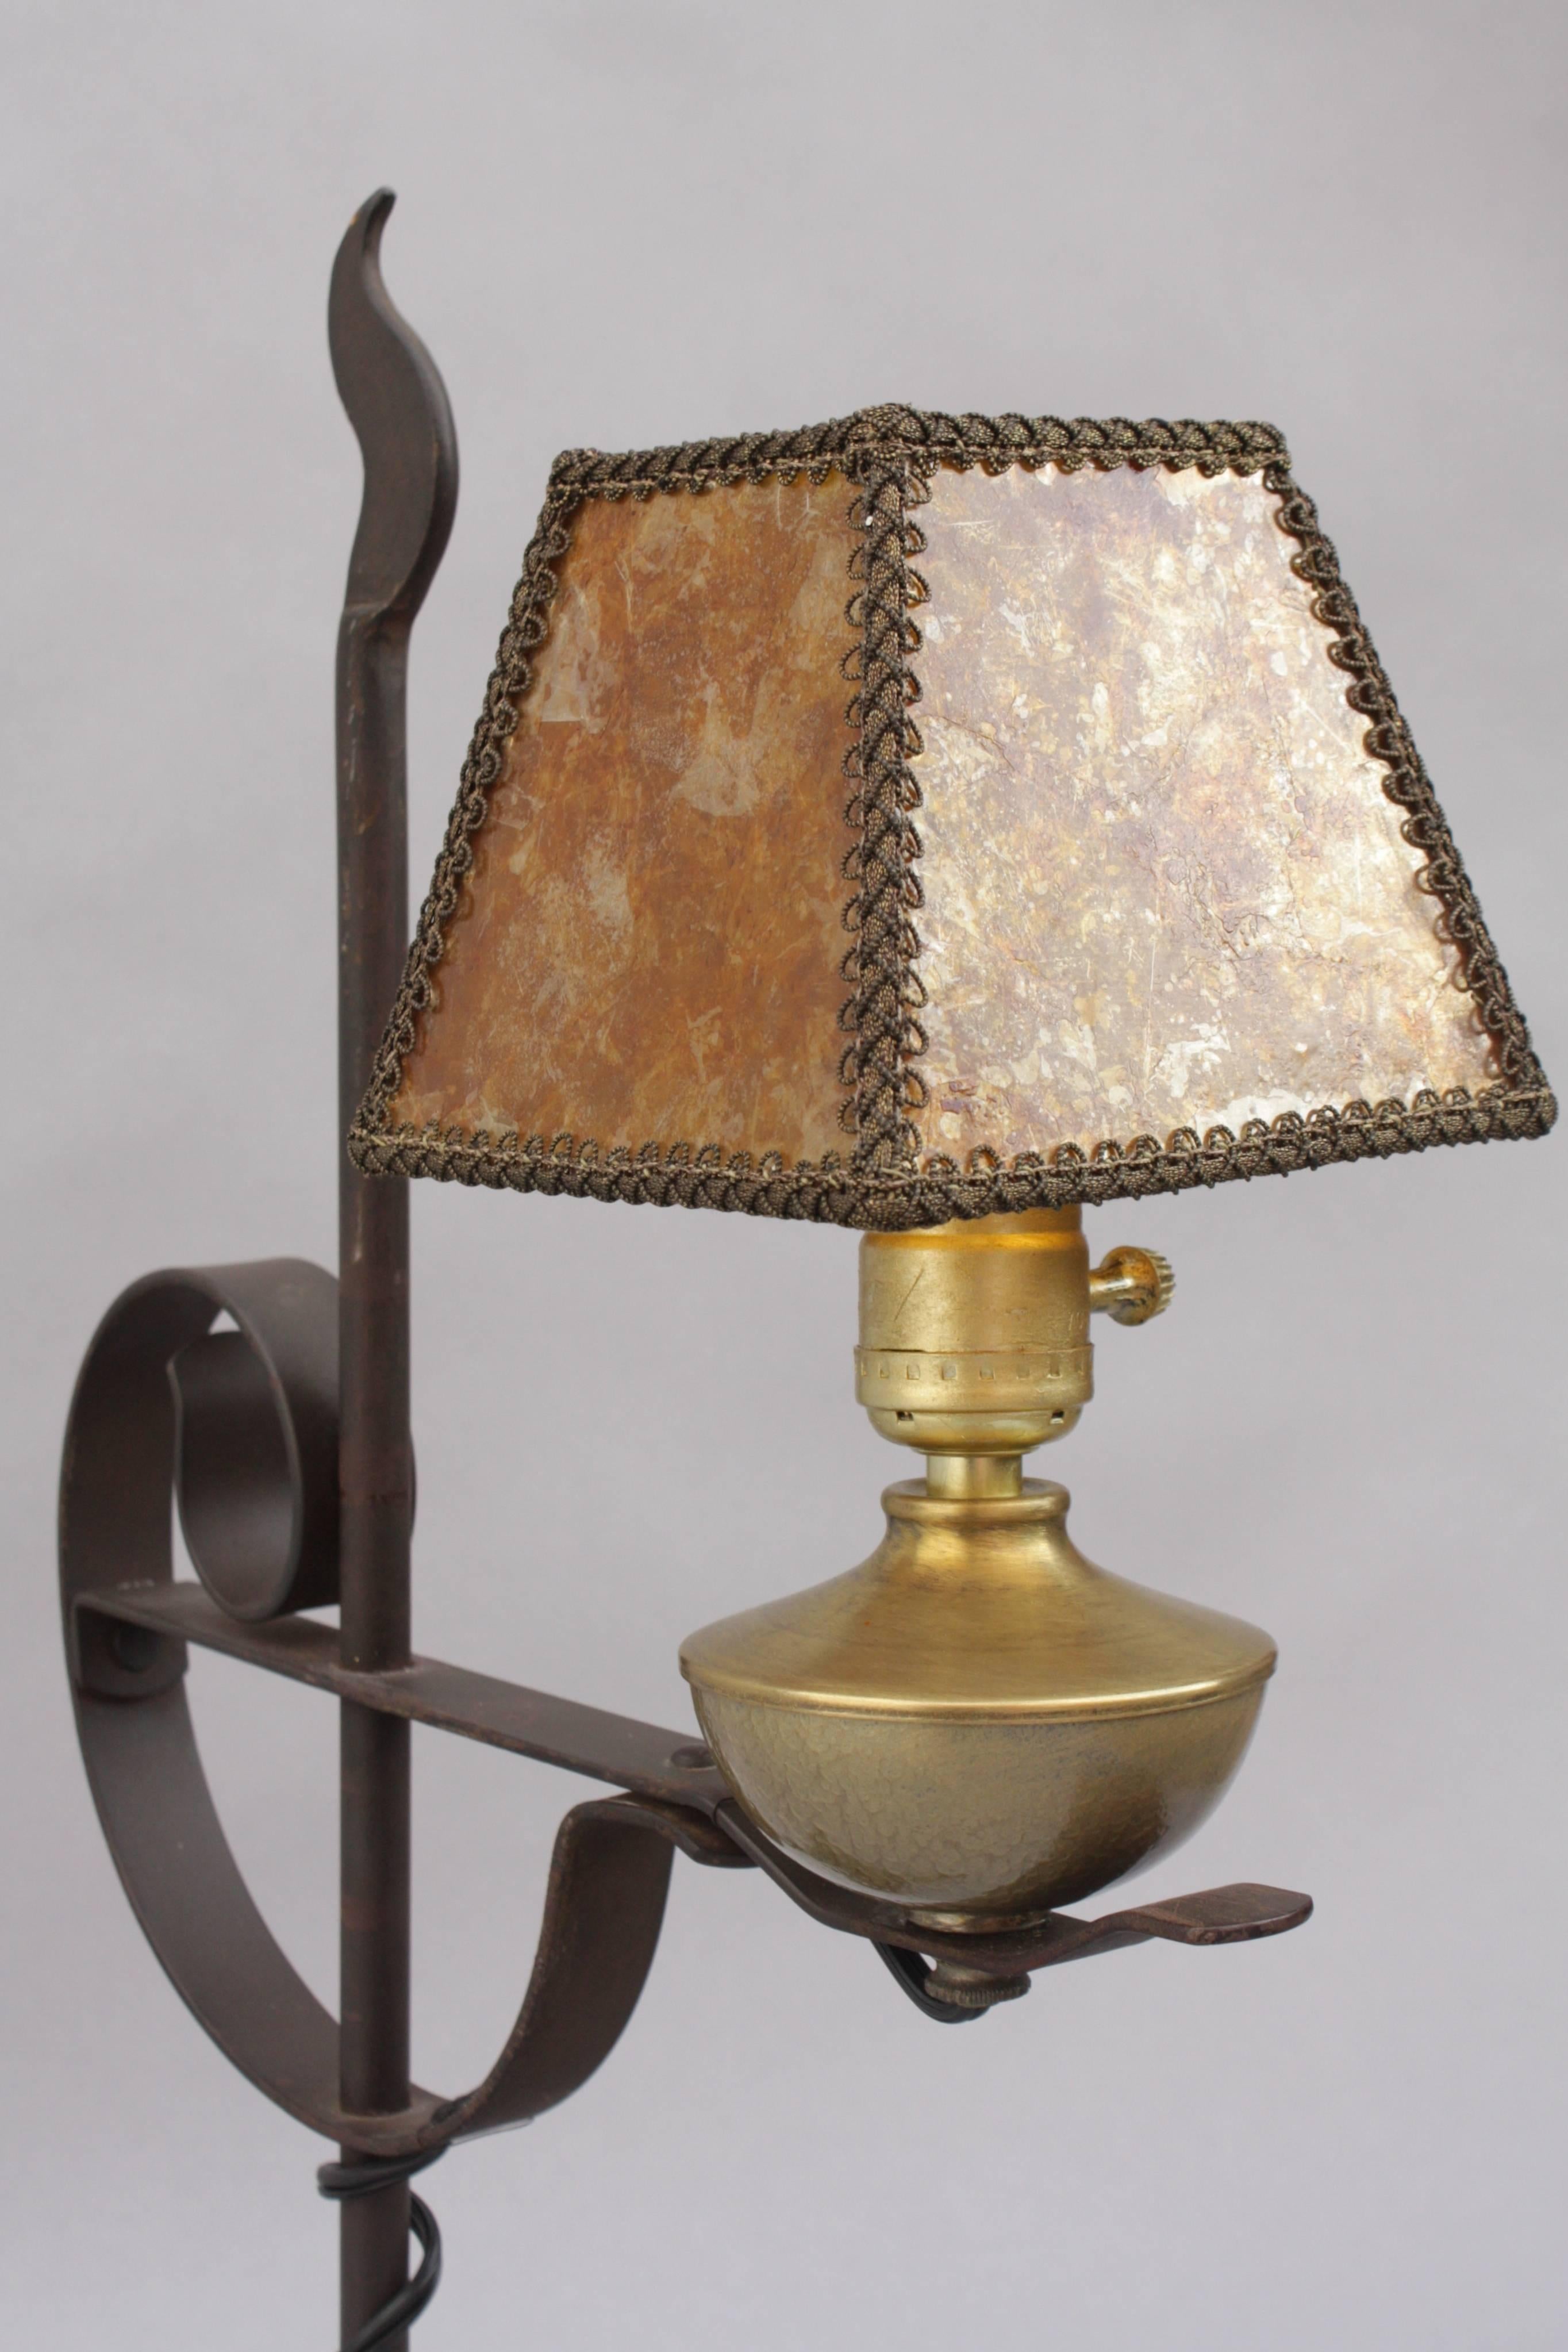 1920s style lamp